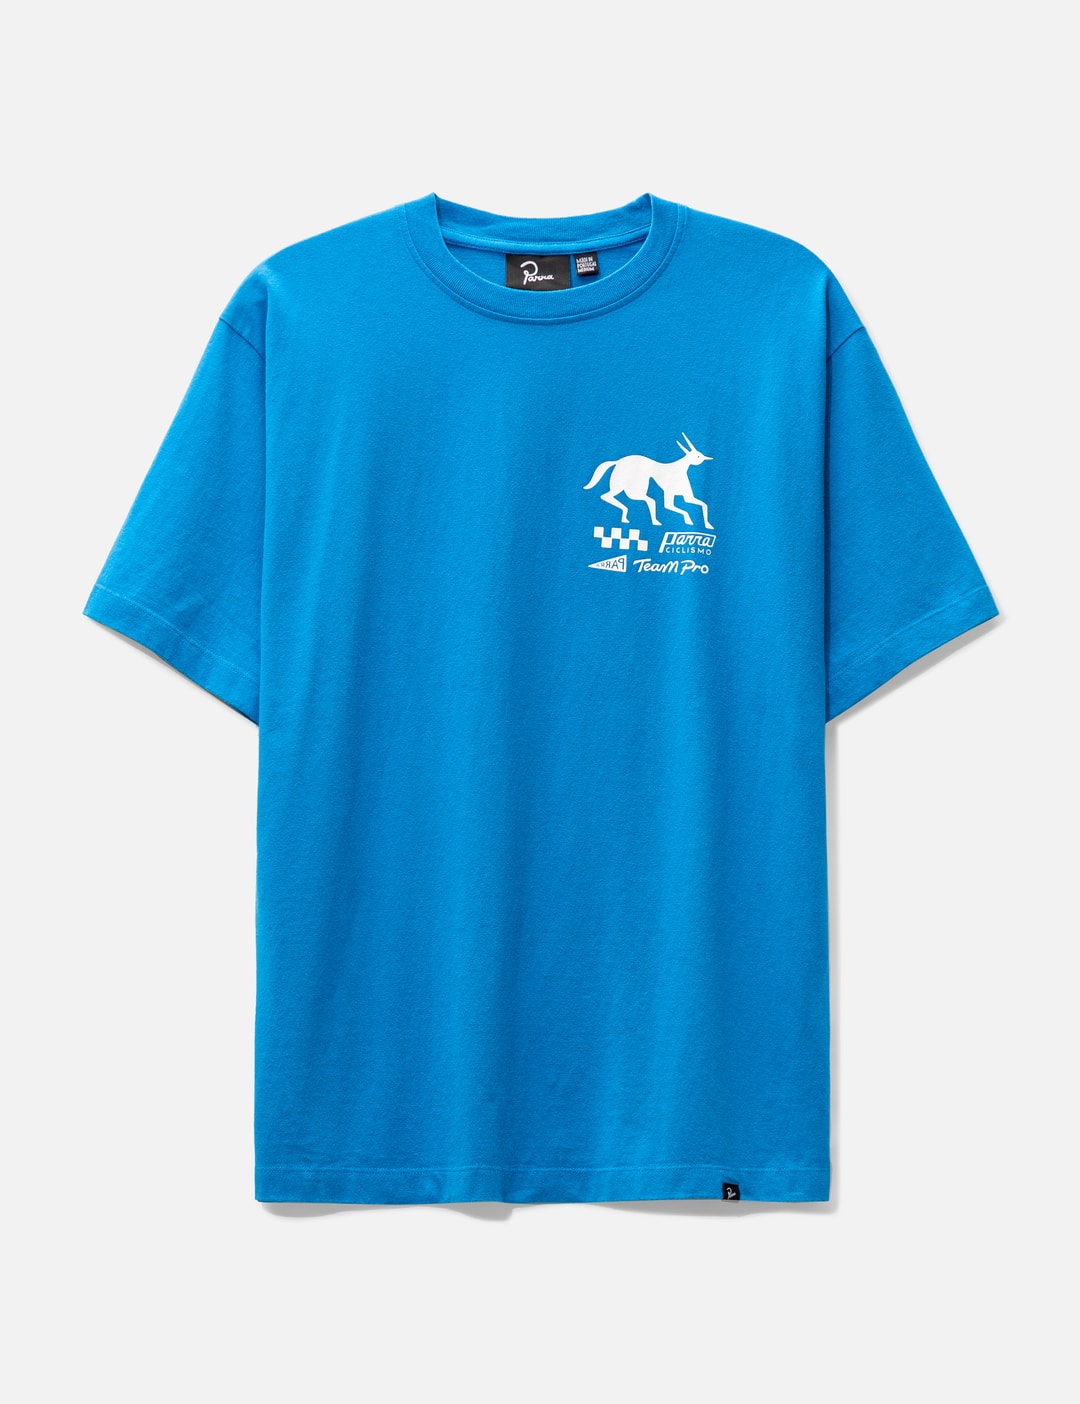 By Parra - under water t-shirt | HBX - HYPEBEAST 為您搜羅全球潮流時尚品牌